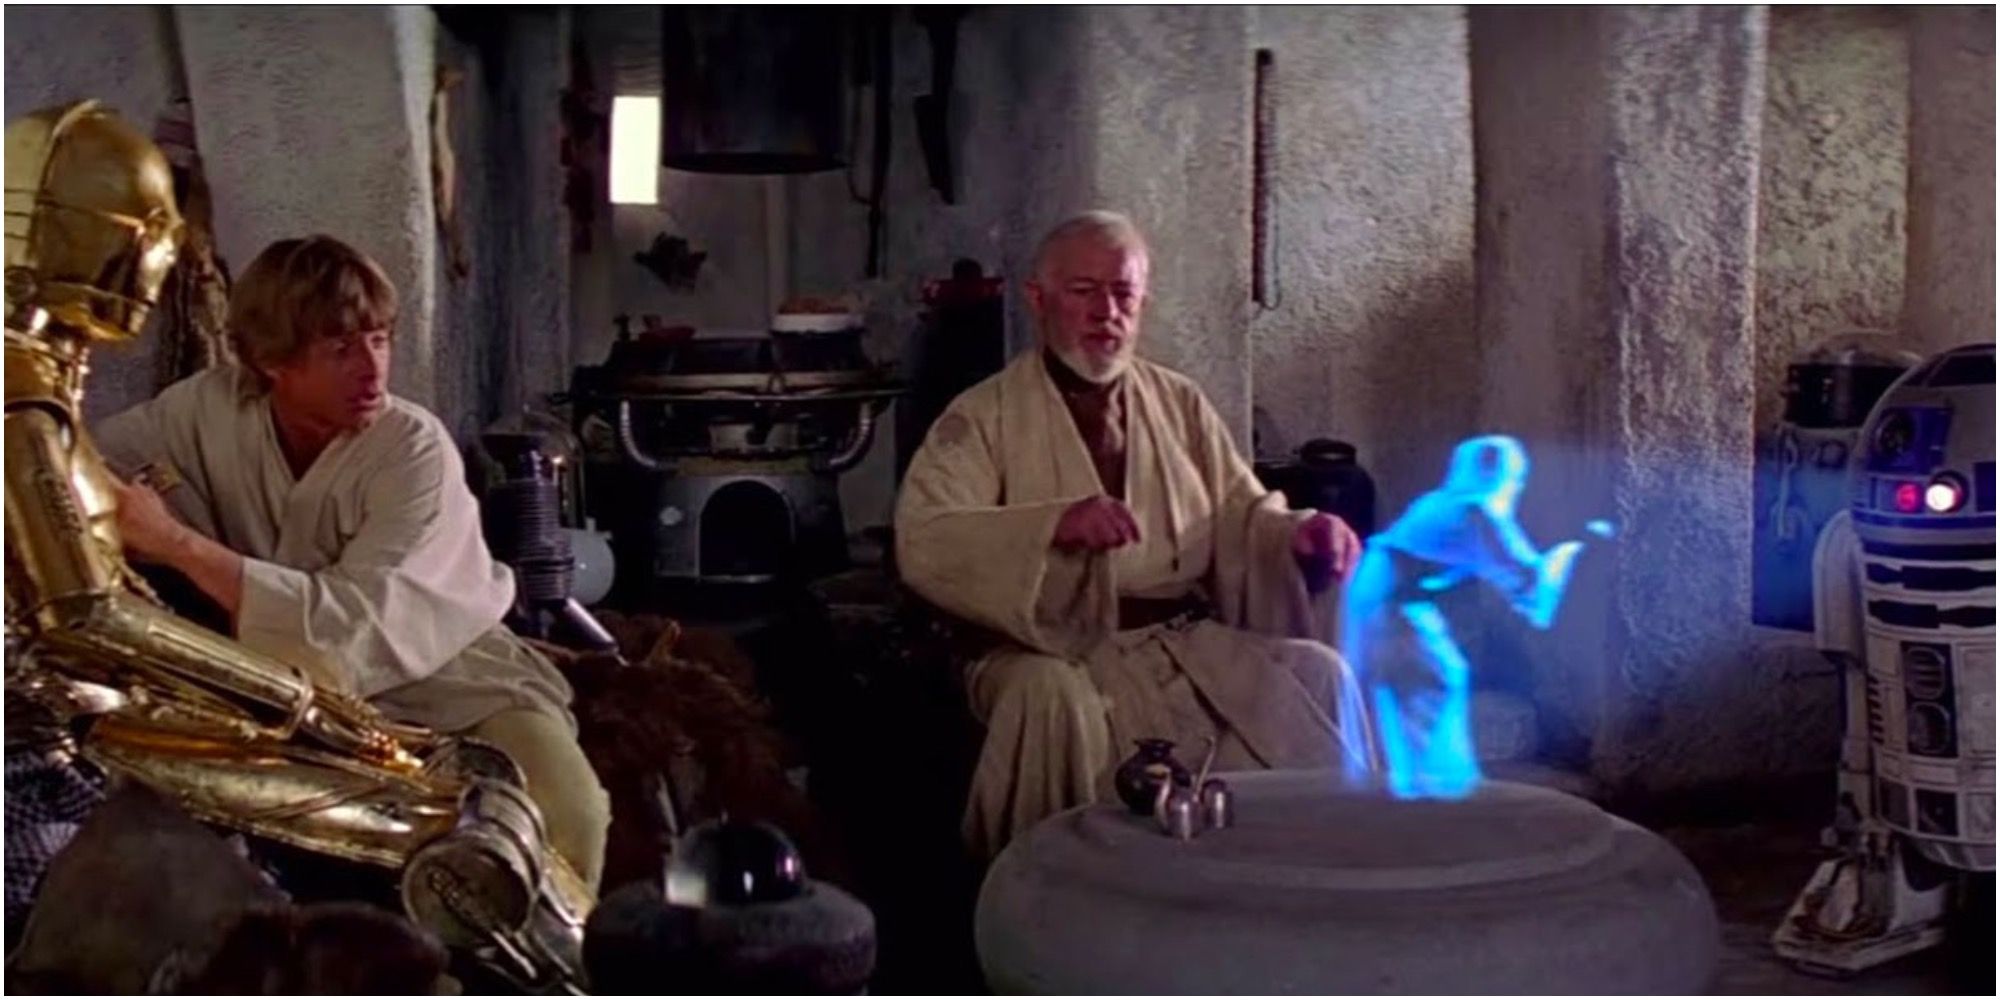 Princess Leia transmits a message to Obi-Wan Kenobi through R2-D2